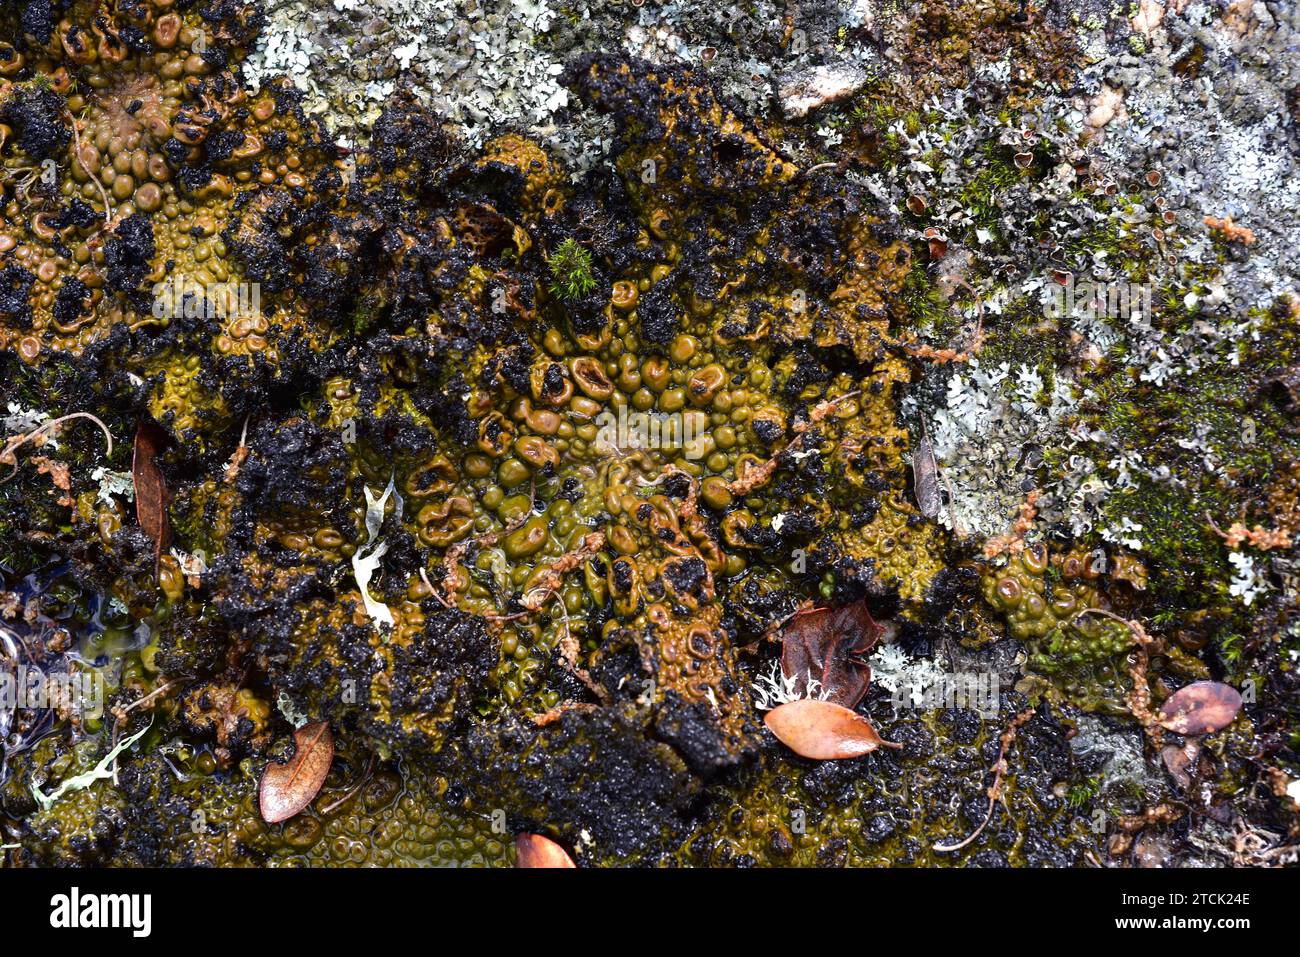 Umbilicaria pustulata or Lasallia pustulata is a foliose lichen that grows on siliceous rocks. This photo was taken in Arribes del Duero Natural Park, Stock Photo